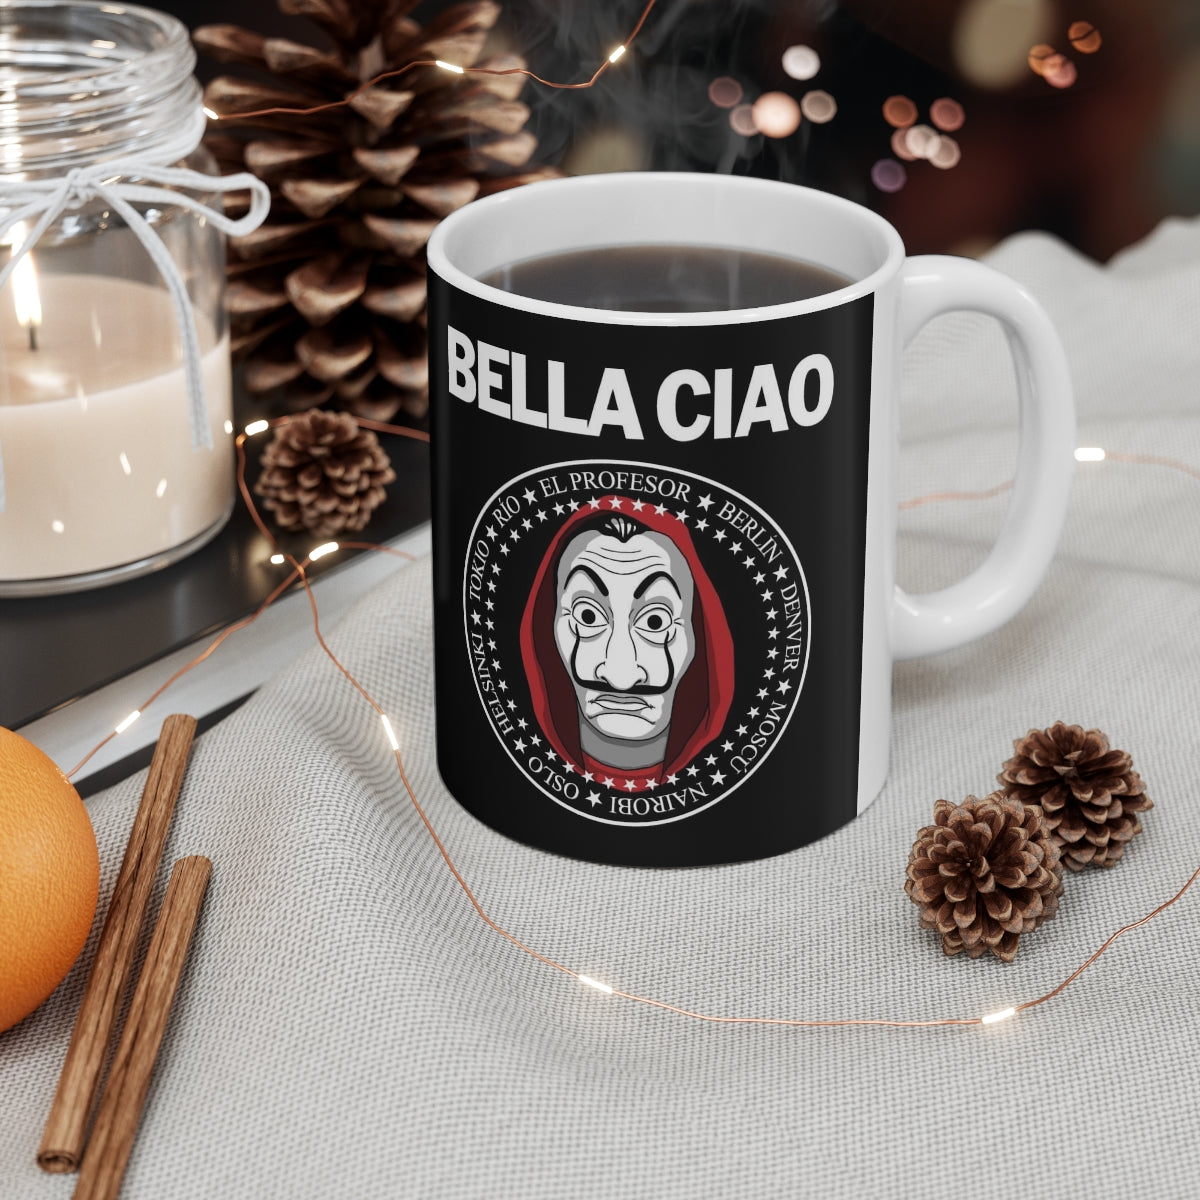 Bella Ciao Money Heist Mug 11oz - Geek House Creations